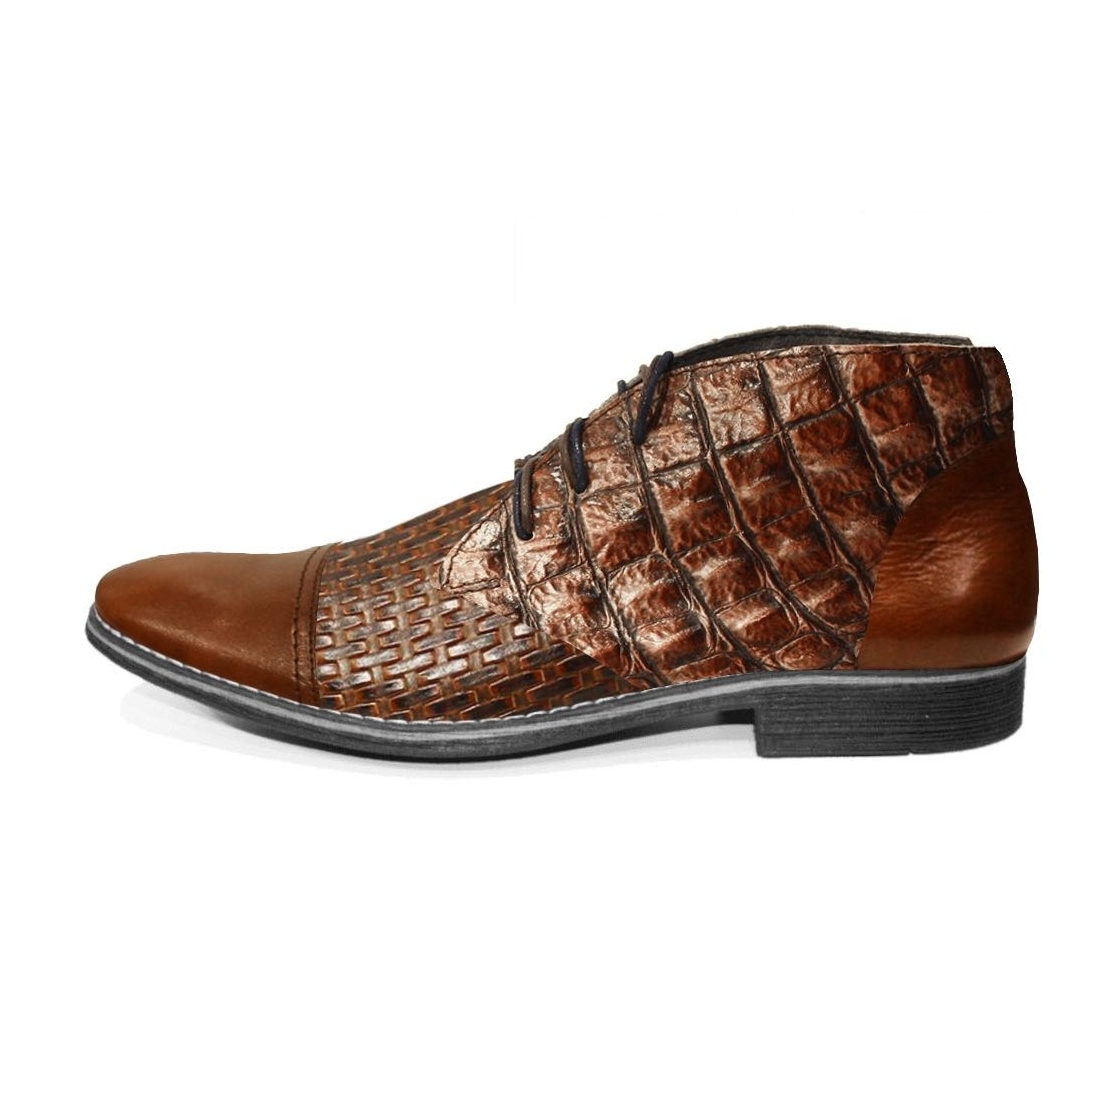 Modello Browerro - чукка мужские - Handmade Colorful Italian Leather Shoes